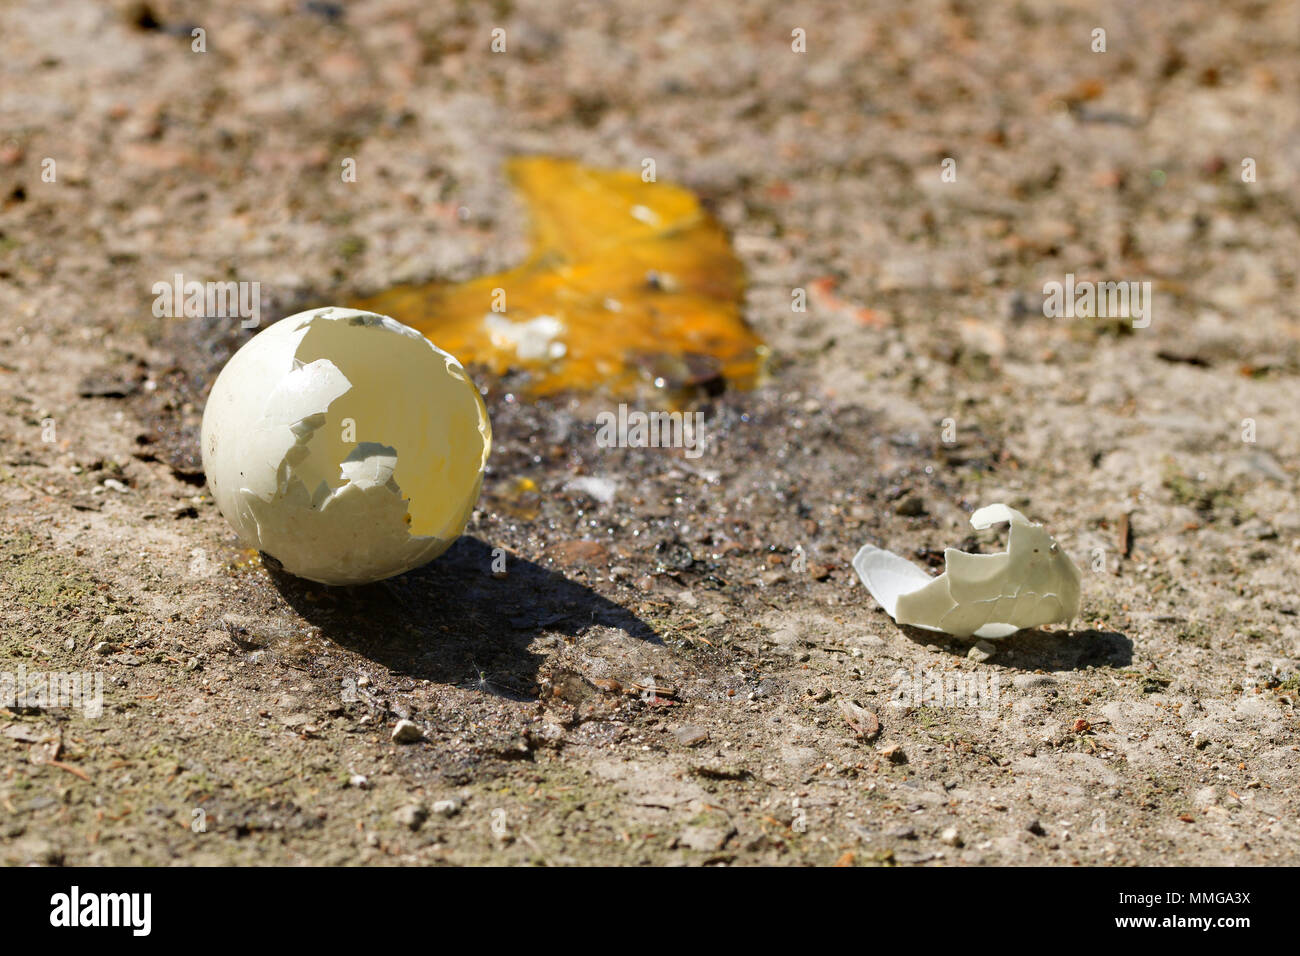 Wild bird egg shell fallen from the nest onto concrete floor broken with a dried yolk Stock Photo